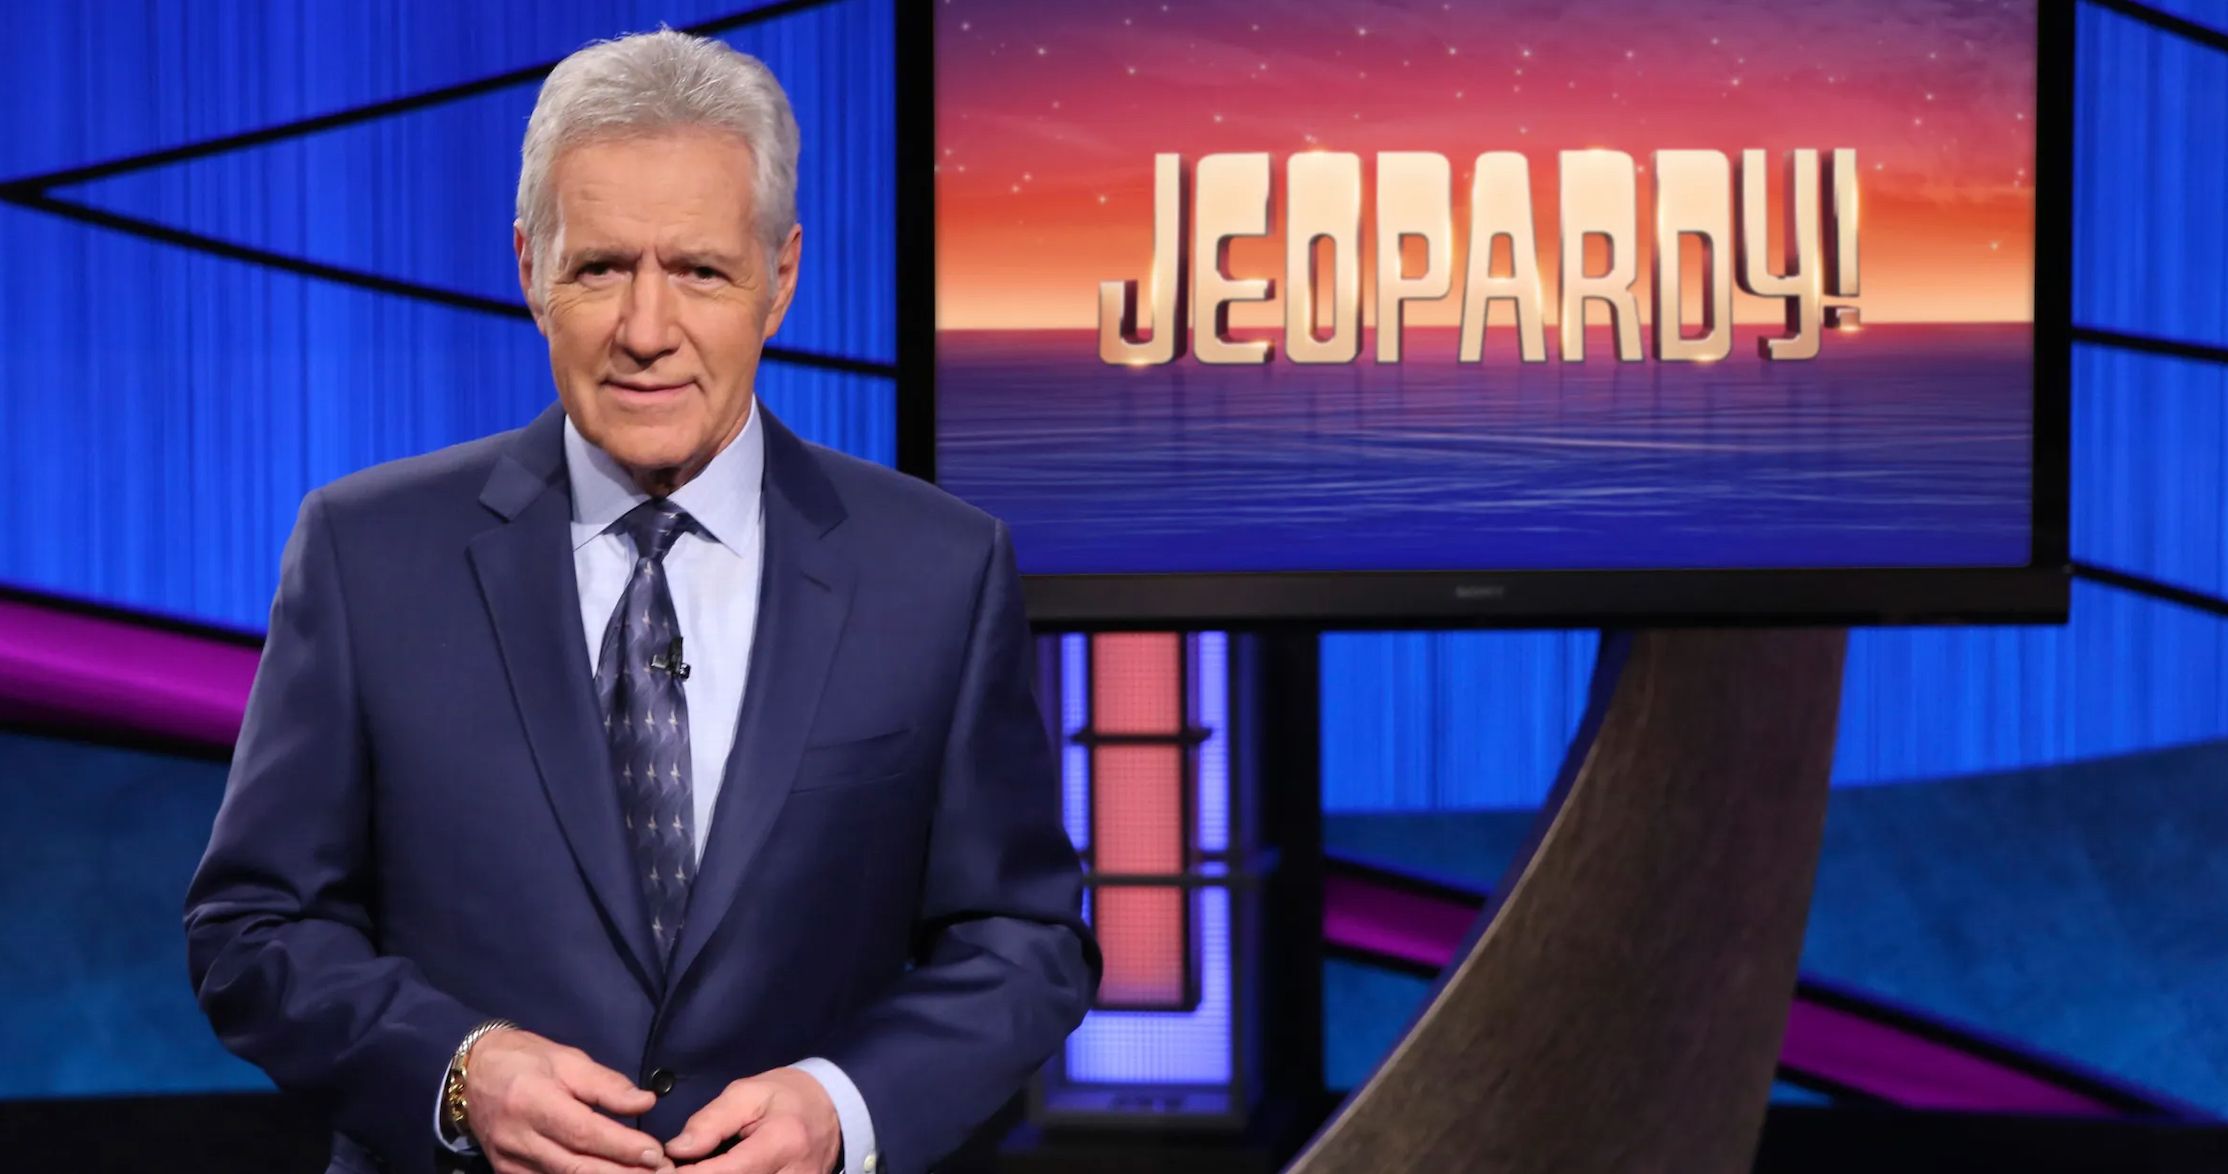 Alex Trebek's Final Jeopardy! Episodes Air This Week